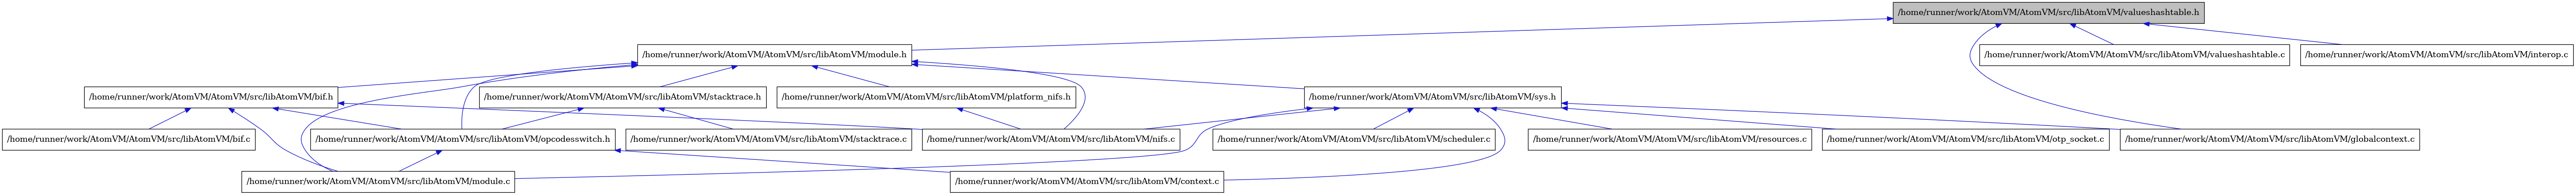 digraph {
    graph [bgcolor="#00000000"]
    node [shape=rectangle style=filled fillcolor="#FFFFFF" font=Helvetica padding=2]
    edge [color="#1414CE"]
    "6" [label="/home/runner/work/AtomVM/AtomVM/src/libAtomVM/bif.c" tooltip="/home/runner/work/AtomVM/AtomVM/src/libAtomVM/bif.c"]
    "5" [label="/home/runner/work/AtomVM/AtomVM/src/libAtomVM/bif.h" tooltip="/home/runner/work/AtomVM/AtomVM/src/libAtomVM/bif.h"]
    "11" [label="/home/runner/work/AtomVM/AtomVM/src/libAtomVM/platform_nifs.h" tooltip="/home/runner/work/AtomVM/AtomVM/src/libAtomVM/platform_nifs.h"]
    "18" [label="/home/runner/work/AtomVM/AtomVM/src/libAtomVM/valueshashtable.c" tooltip="/home/runner/work/AtomVM/AtomVM/src/libAtomVM/valueshashtable.c"]
    "1" [label="/home/runner/work/AtomVM/AtomVM/src/libAtomVM/valueshashtable.h" tooltip="/home/runner/work/AtomVM/AtomVM/src/libAtomVM/valueshashtable.h" fillcolor="#BFBFBF"]
    "17" [label="/home/runner/work/AtomVM/AtomVM/src/libAtomVM/scheduler.c" tooltip="/home/runner/work/AtomVM/AtomVM/src/libAtomVM/scheduler.c"]
    "10" [label="/home/runner/work/AtomVM/AtomVM/src/libAtomVM/context.c" tooltip="/home/runner/work/AtomVM/AtomVM/src/libAtomVM/context.c"]
    "13" [label="/home/runner/work/AtomVM/AtomVM/src/libAtomVM/stacktrace.c" tooltip="/home/runner/work/AtomVM/AtomVM/src/libAtomVM/stacktrace.c"]
    "12" [label="/home/runner/work/AtomVM/AtomVM/src/libAtomVM/stacktrace.h" tooltip="/home/runner/work/AtomVM/AtomVM/src/libAtomVM/stacktrace.h"]
    "7" [label="/home/runner/work/AtomVM/AtomVM/src/libAtomVM/module.c" tooltip="/home/runner/work/AtomVM/AtomVM/src/libAtomVM/module.c"]
    "4" [label="/home/runner/work/AtomVM/AtomVM/src/libAtomVM/module.h" tooltip="/home/runner/work/AtomVM/AtomVM/src/libAtomVM/module.h"]
    "3" [label="/home/runner/work/AtomVM/AtomVM/src/libAtomVM/interop.c" tooltip="/home/runner/work/AtomVM/AtomVM/src/libAtomVM/interop.c"]
    "16" [label="/home/runner/work/AtomVM/AtomVM/src/libAtomVM/resources.c" tooltip="/home/runner/work/AtomVM/AtomVM/src/libAtomVM/resources.c"]
    "14" [label="/home/runner/work/AtomVM/AtomVM/src/libAtomVM/sys.h" tooltip="/home/runner/work/AtomVM/AtomVM/src/libAtomVM/sys.h"]
    "8" [label="/home/runner/work/AtomVM/AtomVM/src/libAtomVM/nifs.c" tooltip="/home/runner/work/AtomVM/AtomVM/src/libAtomVM/nifs.c"]
    "9" [label="/home/runner/work/AtomVM/AtomVM/src/libAtomVM/opcodesswitch.h" tooltip="/home/runner/work/AtomVM/AtomVM/src/libAtomVM/opcodesswitch.h"]
    "2" [label="/home/runner/work/AtomVM/AtomVM/src/libAtomVM/globalcontext.c" tooltip="/home/runner/work/AtomVM/AtomVM/src/libAtomVM/globalcontext.c"]
    "15" [label="/home/runner/work/AtomVM/AtomVM/src/libAtomVM/otp_socket.c" tooltip="/home/runner/work/AtomVM/AtomVM/src/libAtomVM/otp_socket.c"]
    "5" -> "6" [dir=back tooltip="include"]
    "5" -> "7" [dir=back tooltip="include"]
    "5" -> "8" [dir=back tooltip="include"]
    "5" -> "9" [dir=back tooltip="include"]
    "11" -> "8" [dir=back tooltip="include"]
    "1" -> "2" [dir=back tooltip="include"]
    "1" -> "3" [dir=back tooltip="include"]
    "1" -> "4" [dir=back tooltip="include"]
    "1" -> "18" [dir=back tooltip="include"]
    "12" -> "9" [dir=back tooltip="include"]
    "12" -> "13" [dir=back tooltip="include"]
    "4" -> "5" [dir=back tooltip="include"]
    "4" -> "7" [dir=back tooltip="include"]
    "4" -> "8" [dir=back tooltip="include"]
    "4" -> "9" [dir=back tooltip="include"]
    "4" -> "11" [dir=back tooltip="include"]
    "4" -> "12" [dir=back tooltip="include"]
    "4" -> "14" [dir=back tooltip="include"]
    "14" -> "10" [dir=back tooltip="include"]
    "14" -> "2" [dir=back tooltip="include"]
    "14" -> "7" [dir=back tooltip="include"]
    "14" -> "8" [dir=back tooltip="include"]
    "14" -> "15" [dir=back tooltip="include"]
    "14" -> "16" [dir=back tooltip="include"]
    "14" -> "17" [dir=back tooltip="include"]
    "9" -> "10" [dir=back tooltip="include"]
    "9" -> "7" [dir=back tooltip="include"]
}